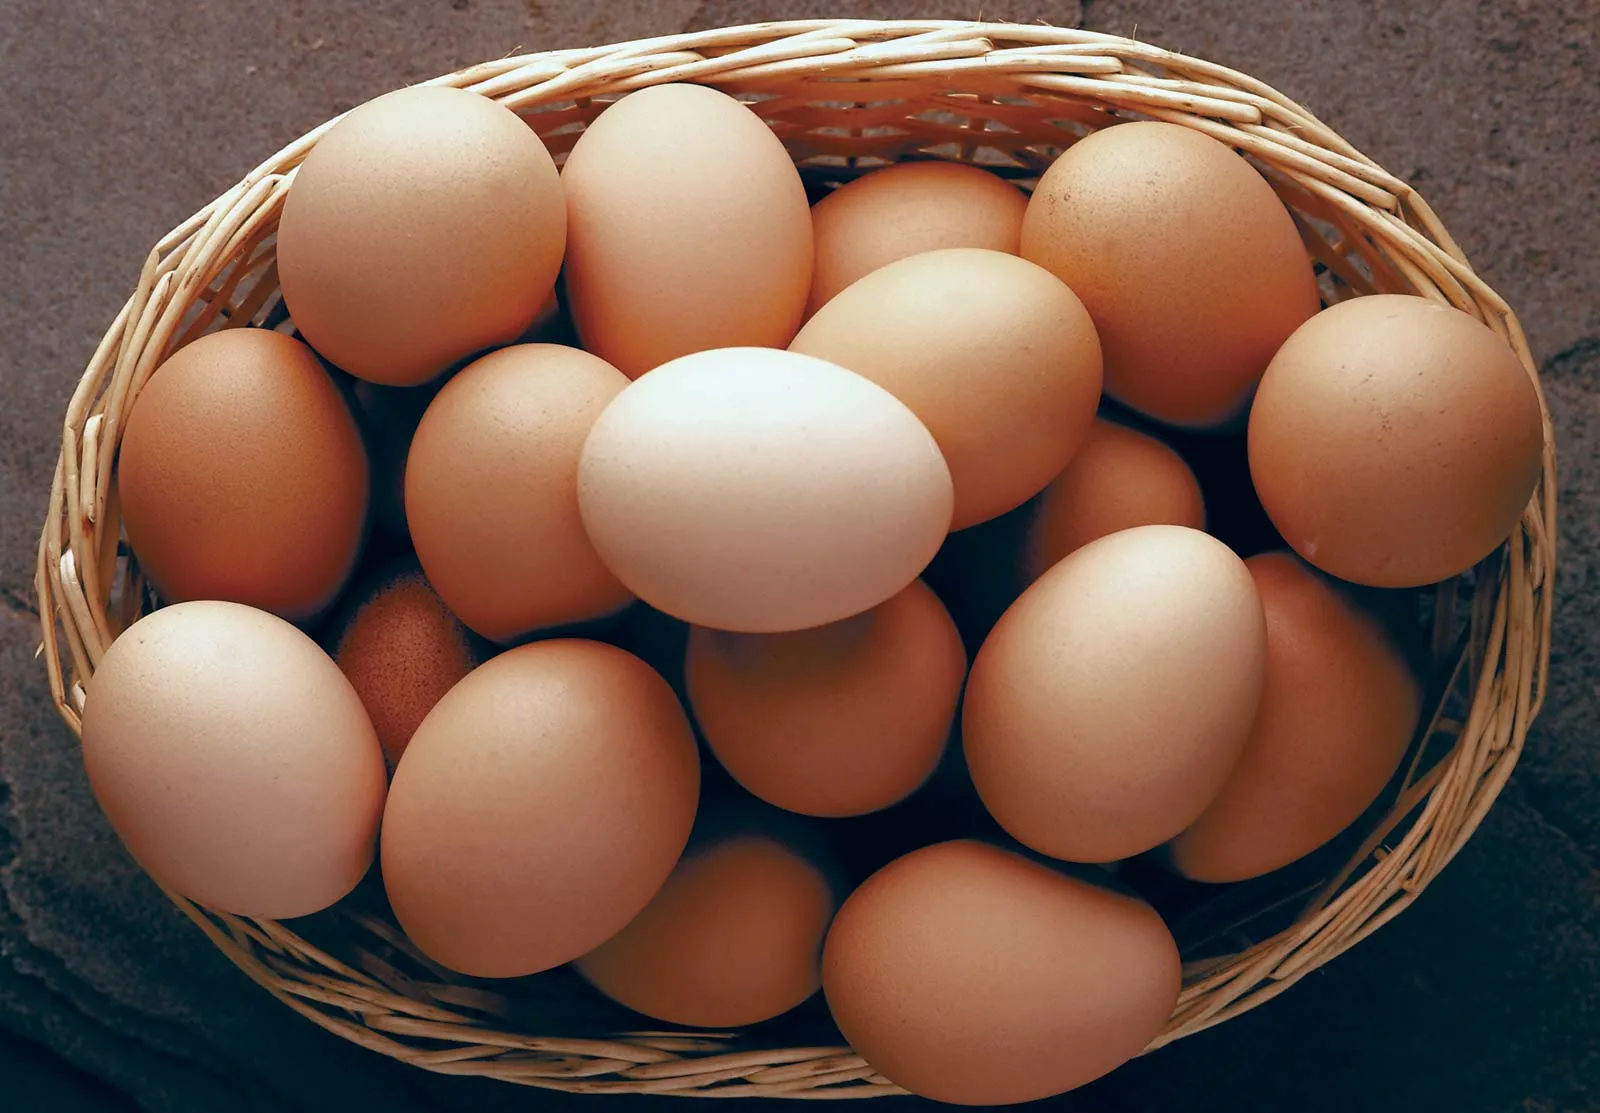 A Fan’s Guide To Conor Benn’s Eggs